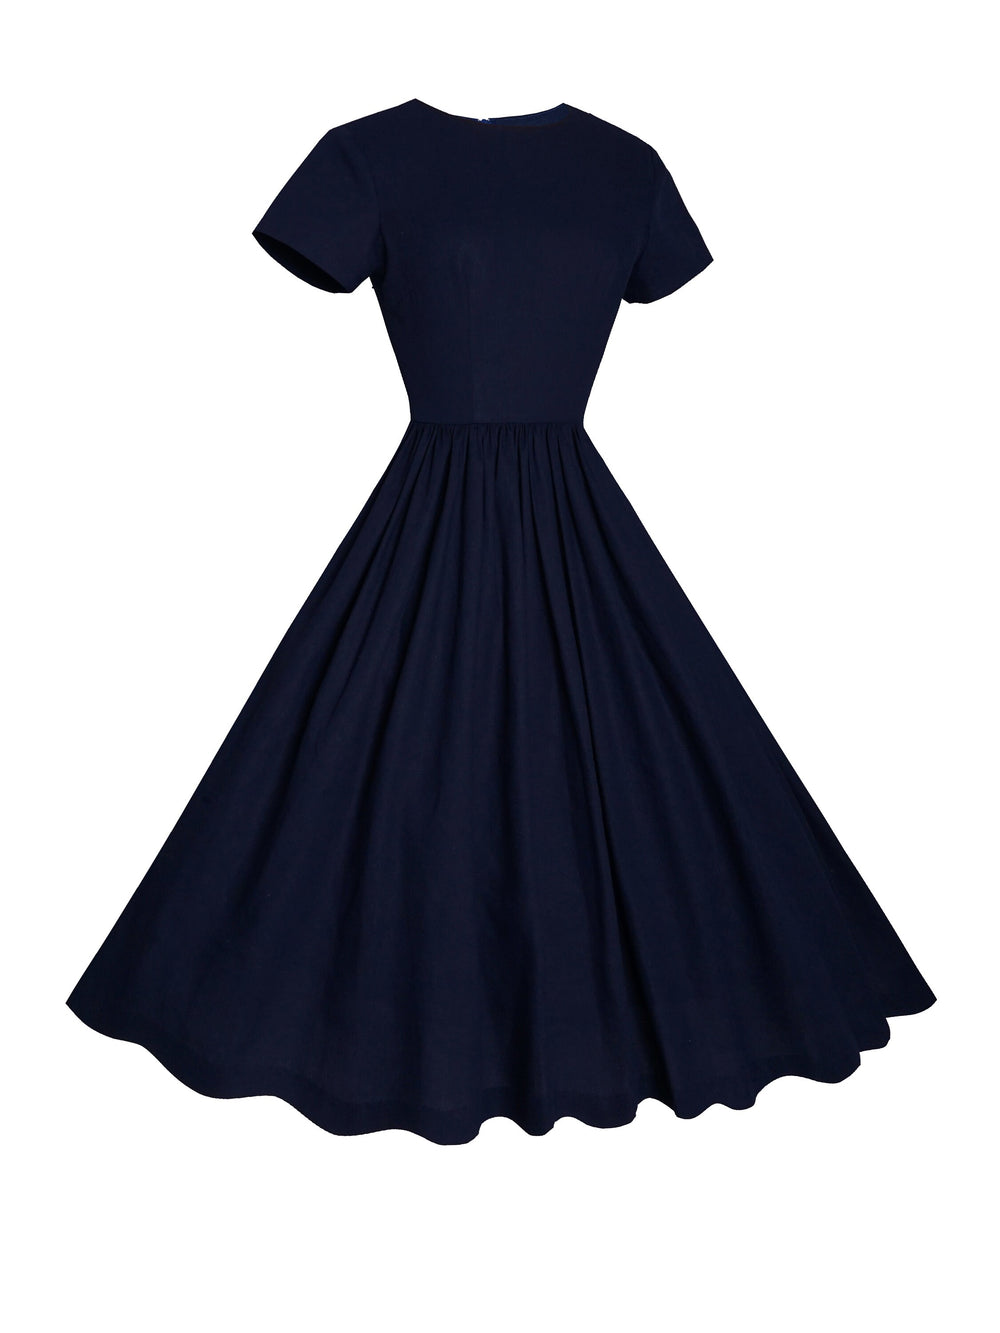 MTO - Dorothy Dress in Indigo Blue Linen